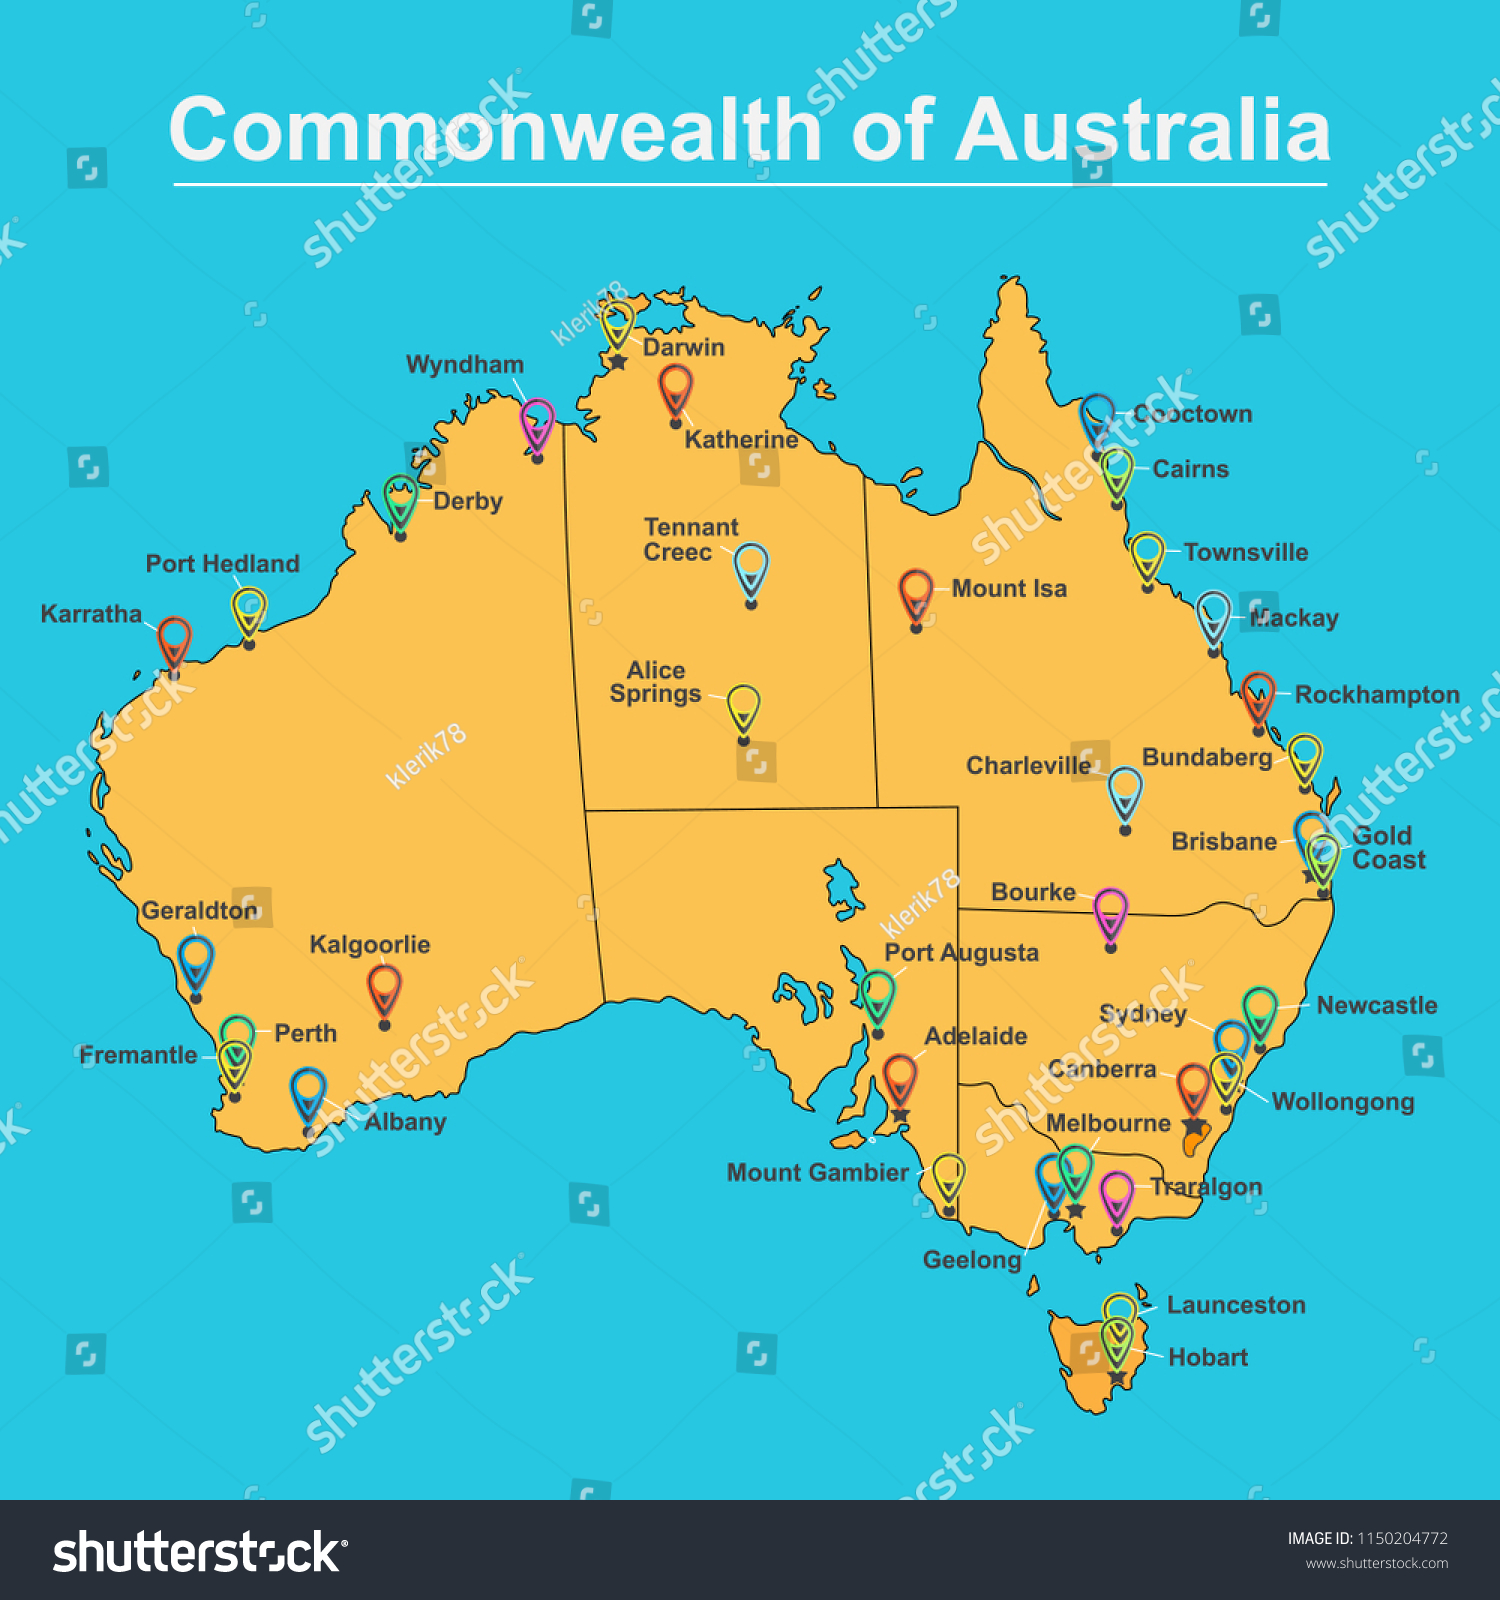 prangende symbol flamme Map Australia Major Towns Cities Vector Stock Vector (Royalty Free)  1150204772